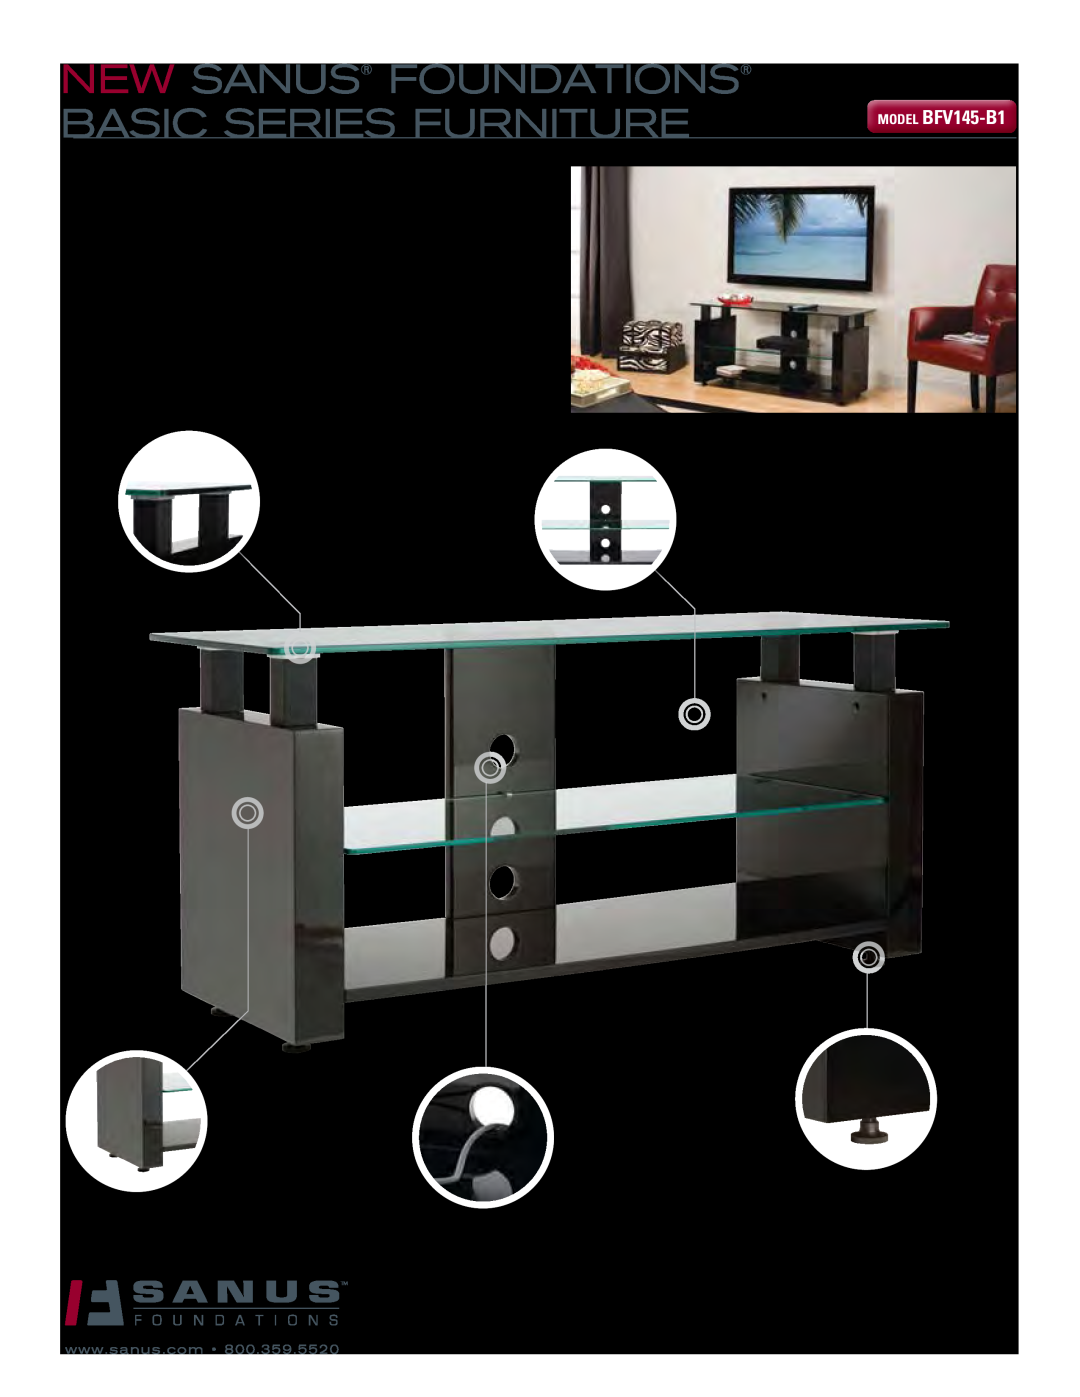 Sanus Systems manual NEW sanus FOUNDATIONS, Basic Series Furniture, Model BFV145-B1 